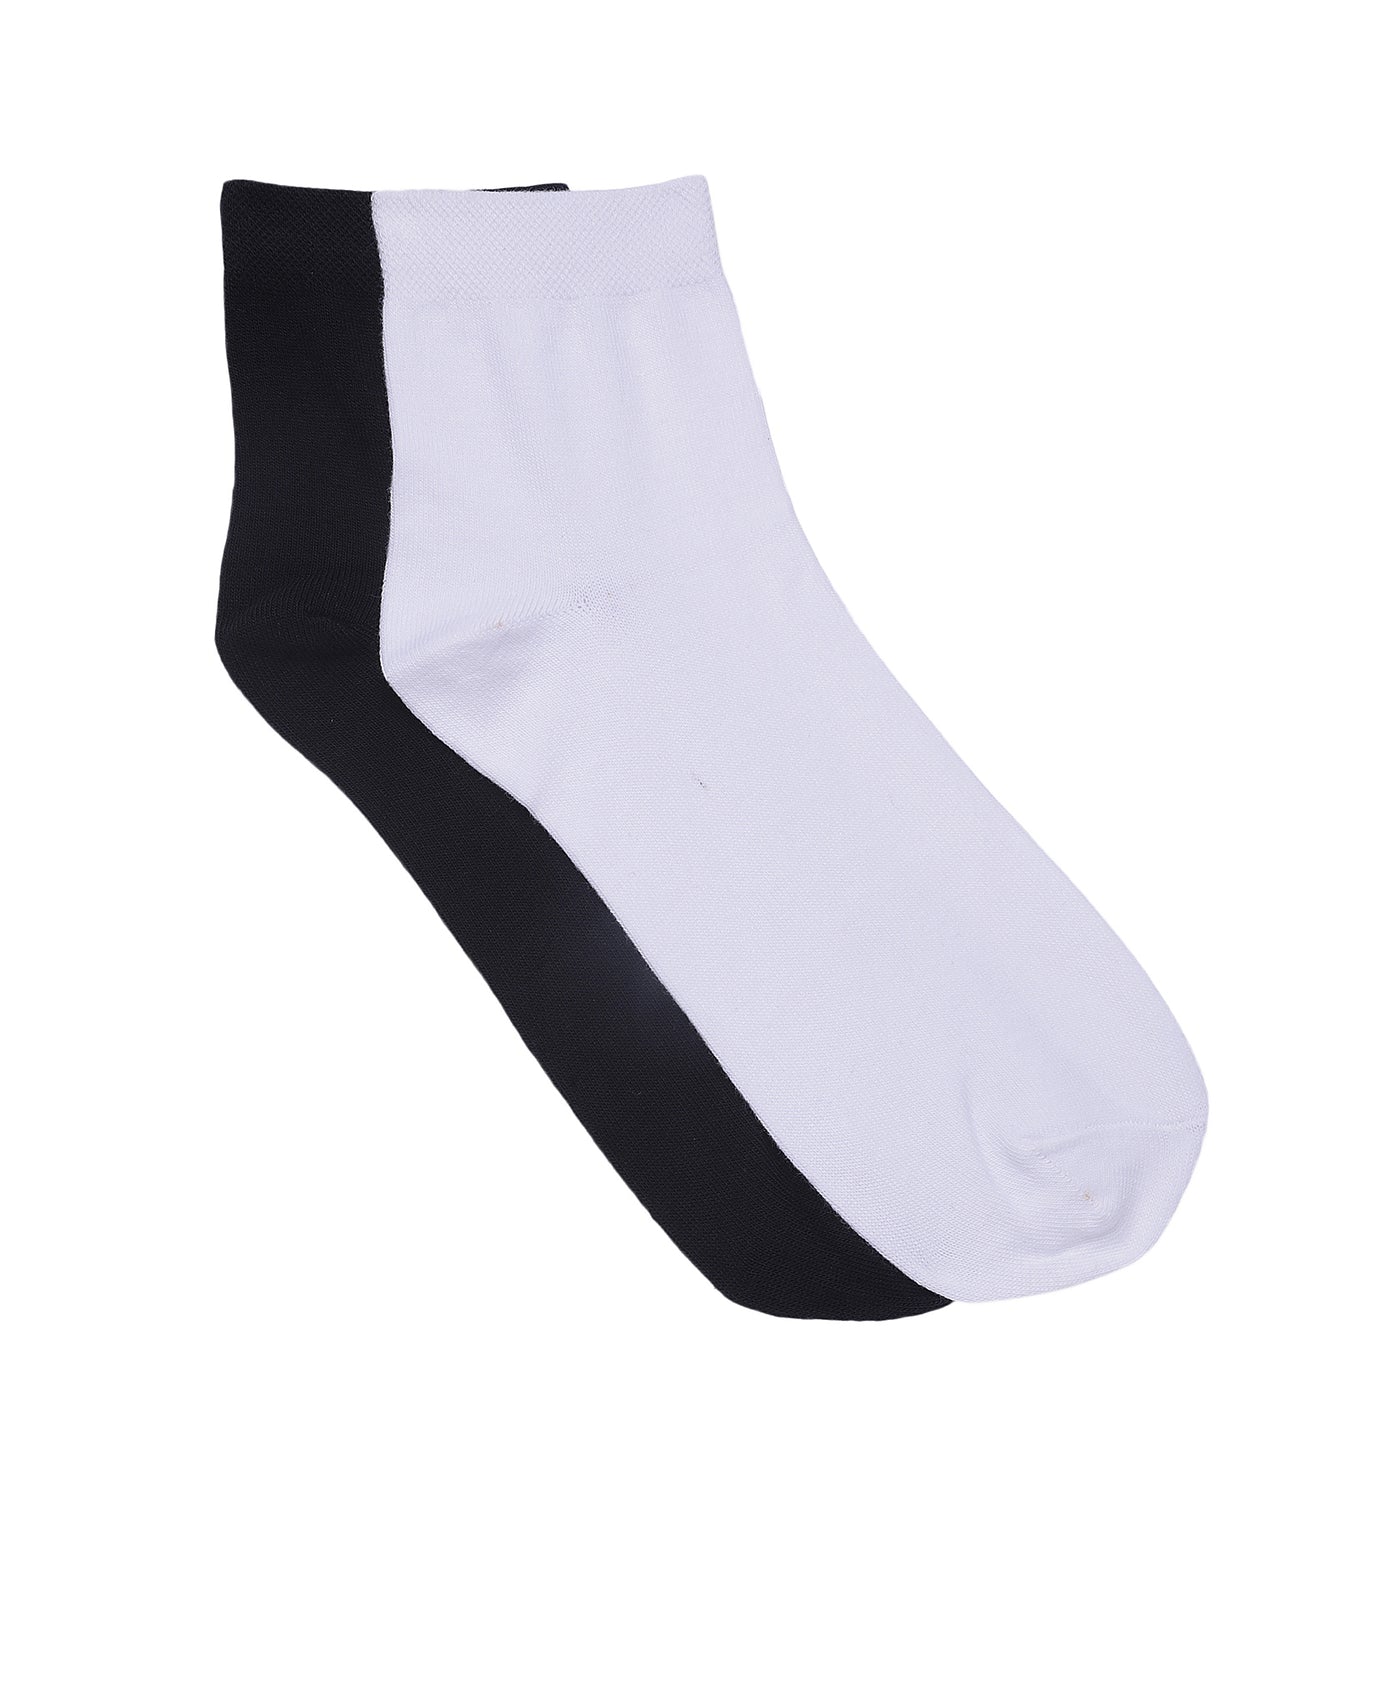 Cotton Black-White Solid Ankle Length Formal Socks (Pack Of 2)